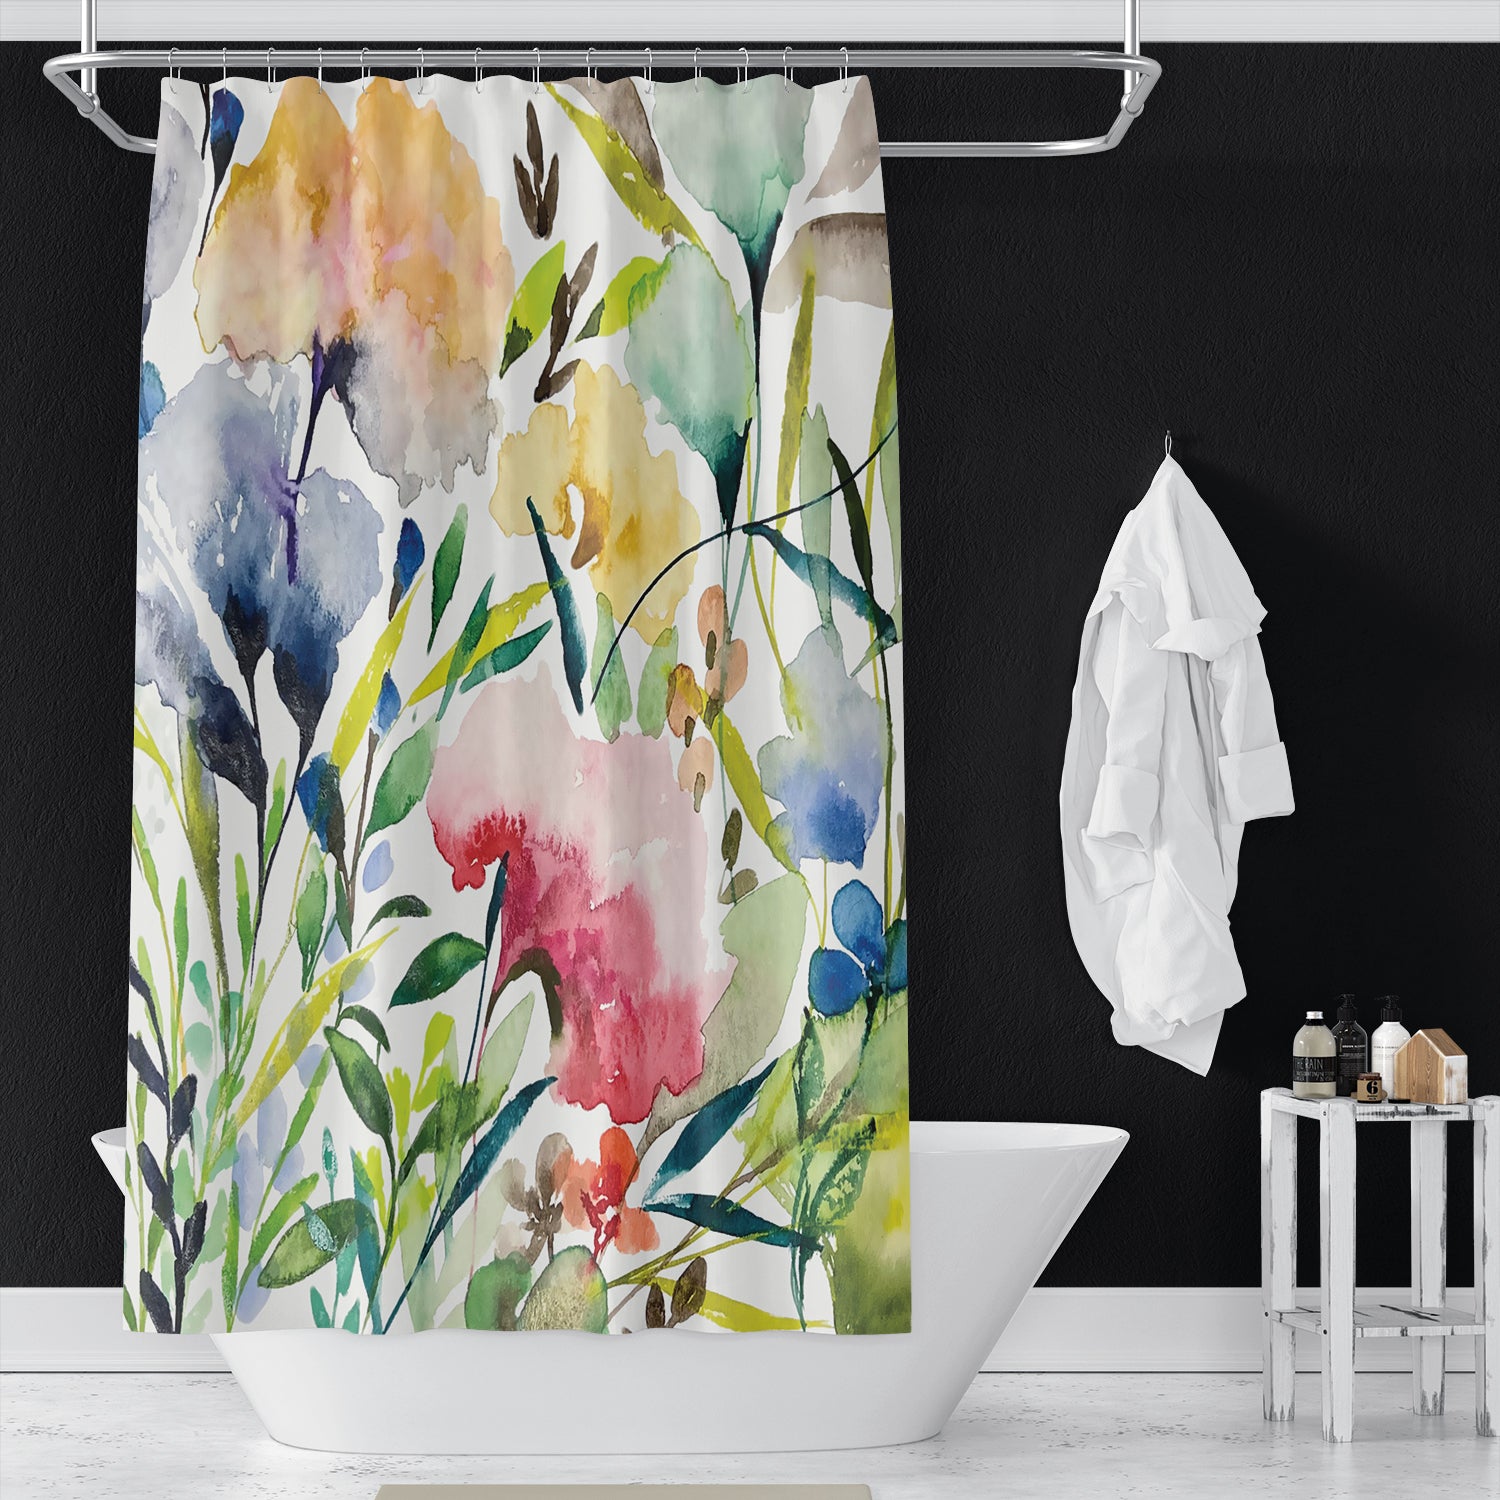 Flowers #4 Botanical Print on Shower Curtain